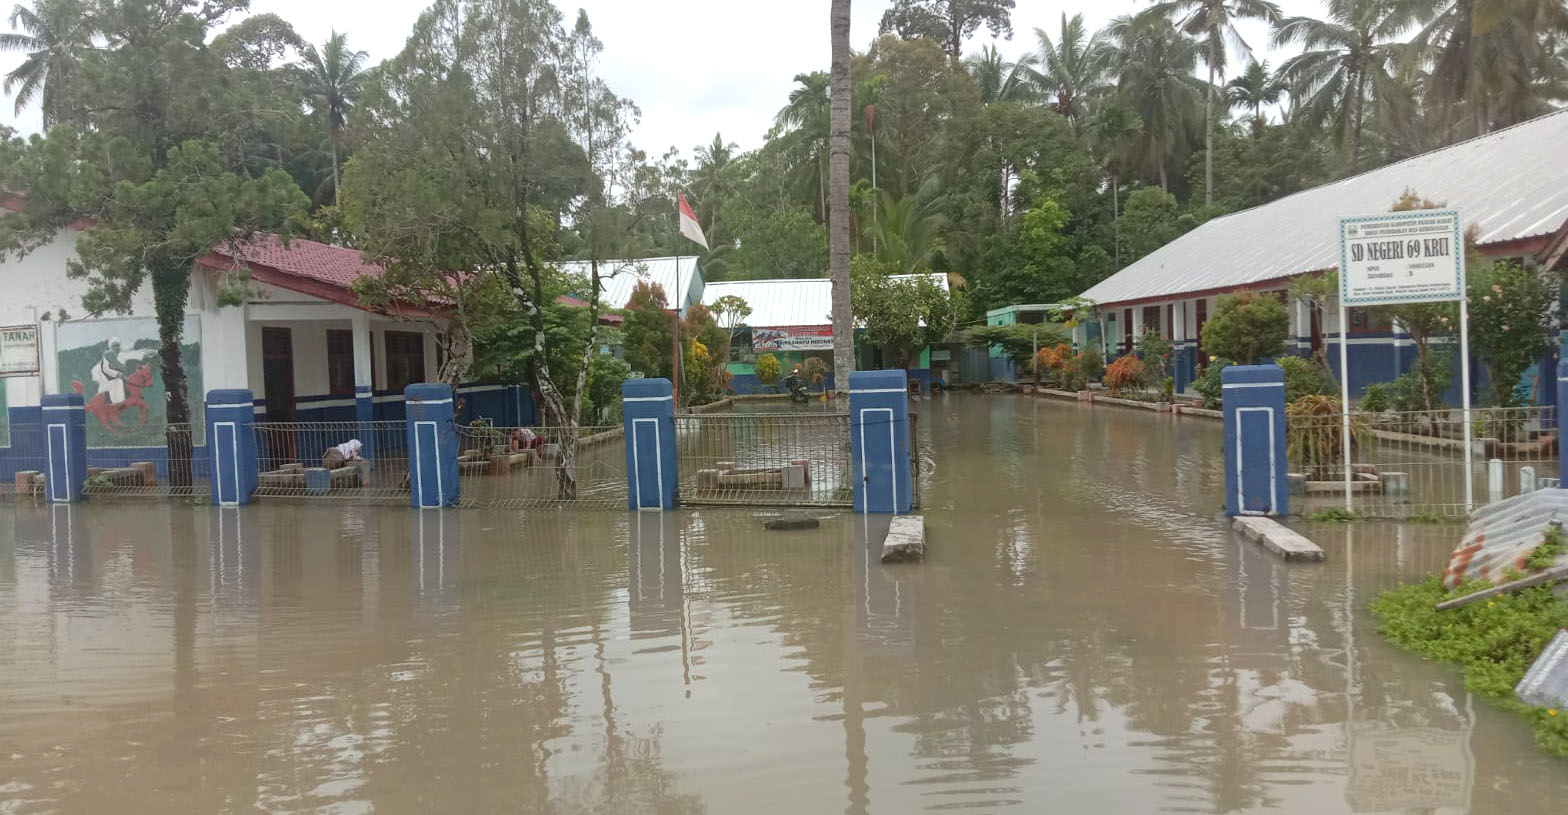 Soal Banjir di SDN 69 Krui, Disdikbud Pesisir Barat Ambil Langkah Ini 